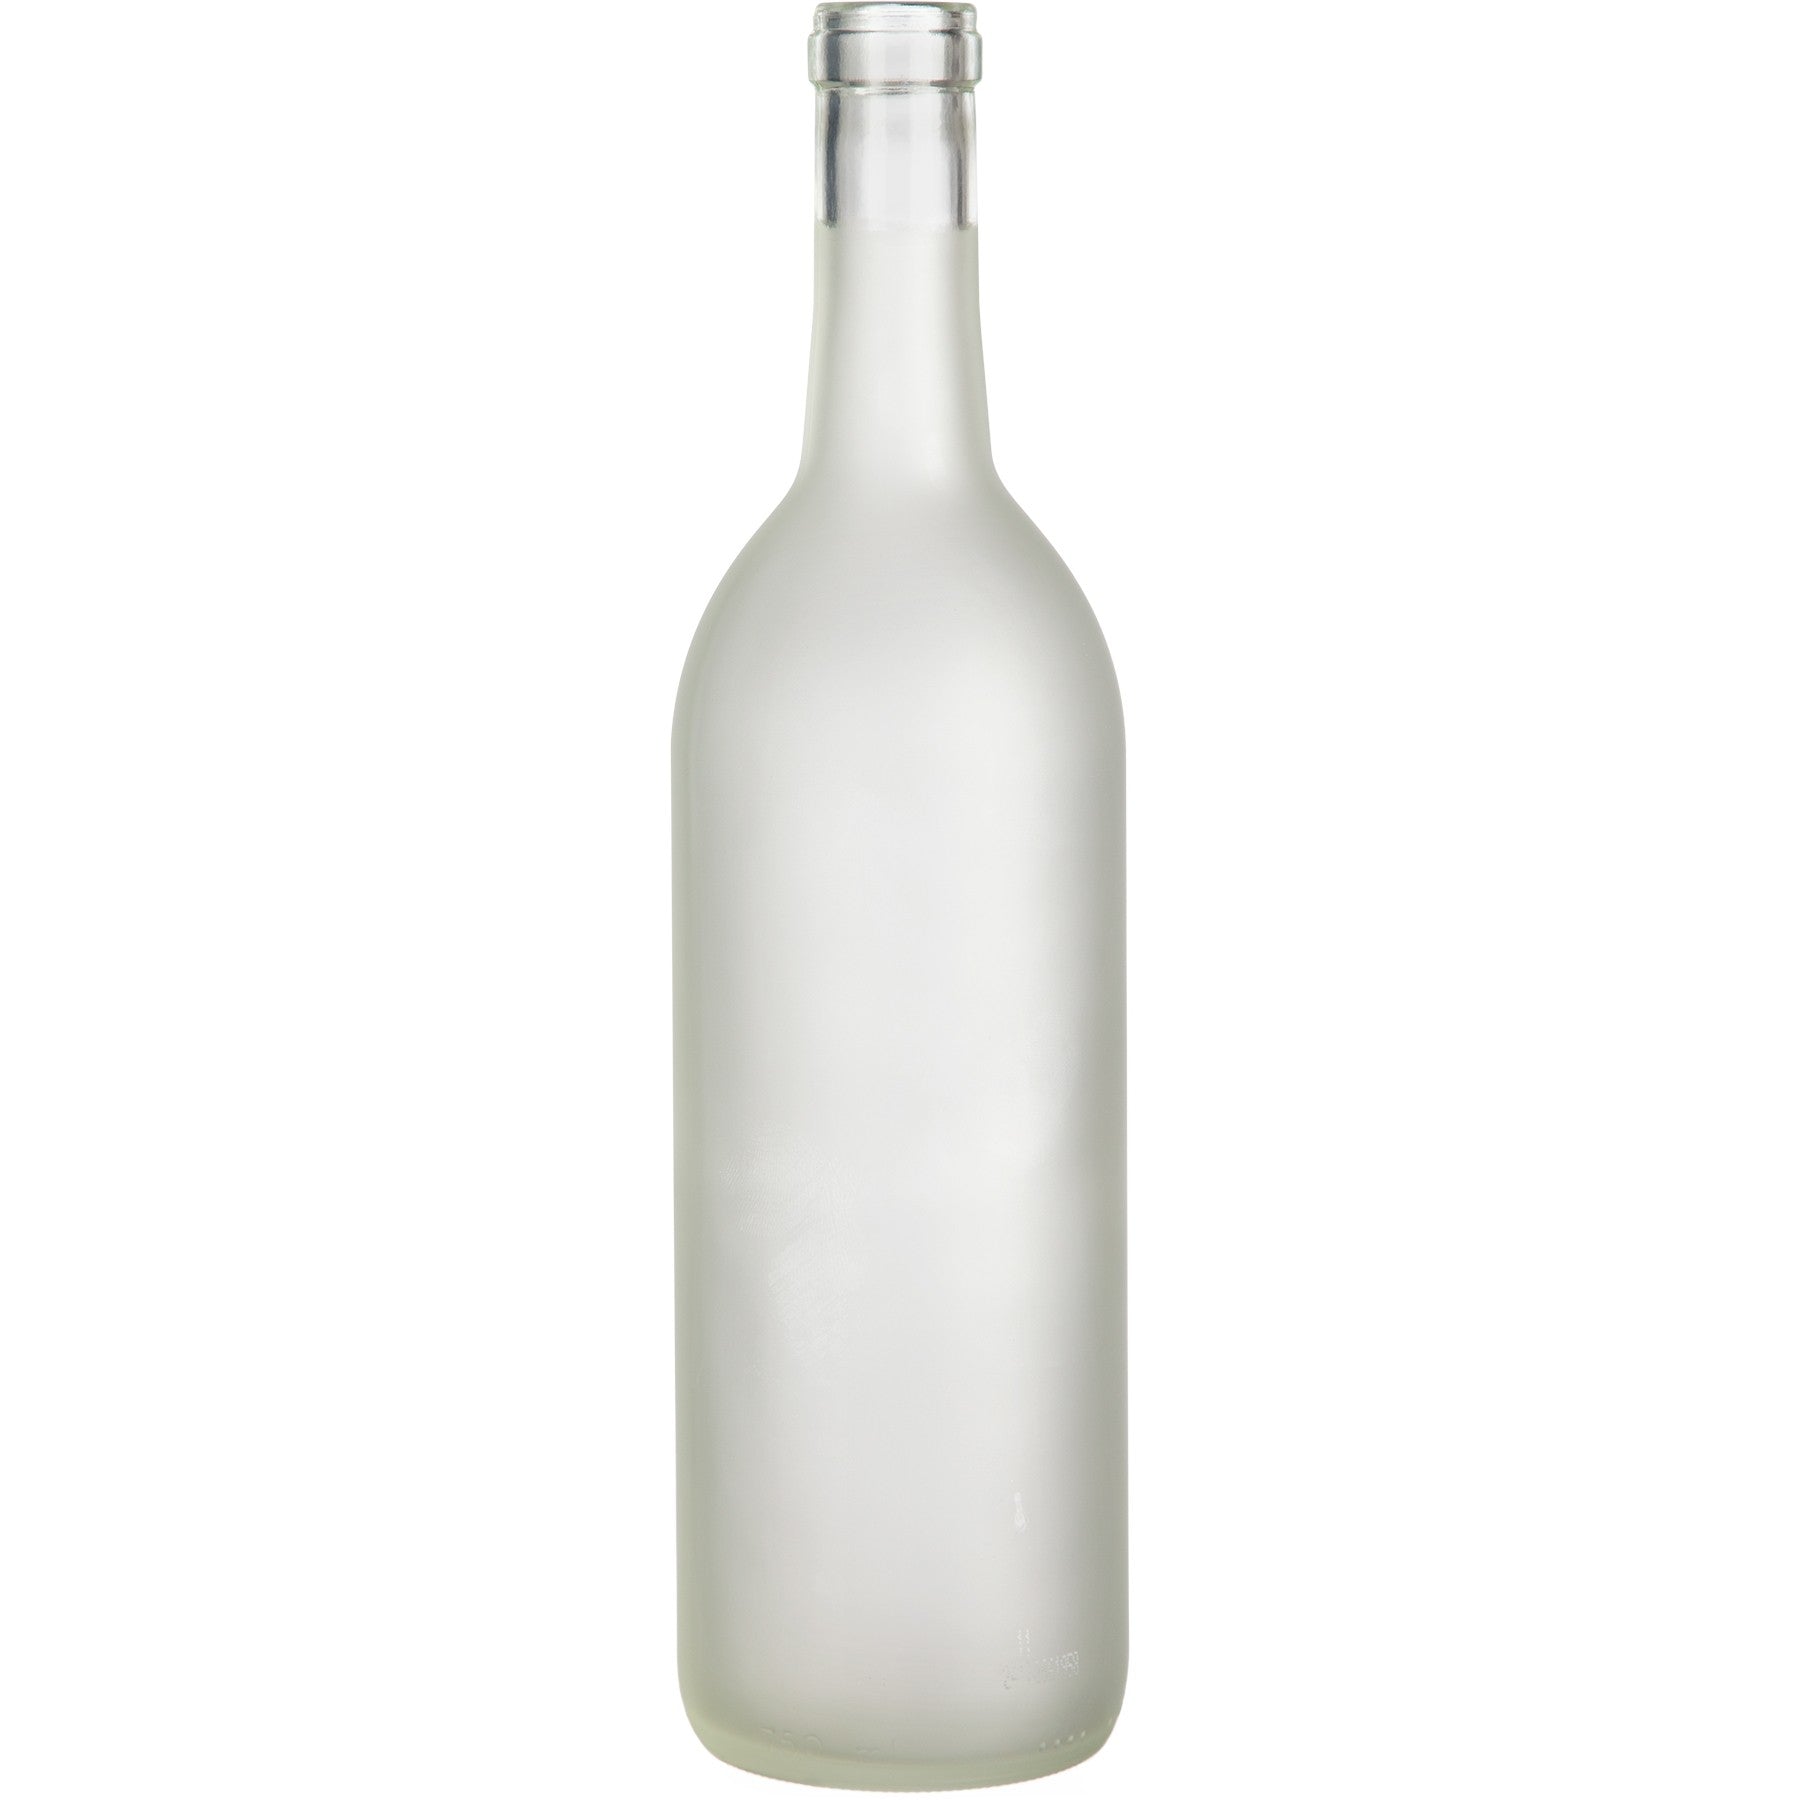 Bordeaux Wine Bottles - 750 ml, Frosted - Case of 12